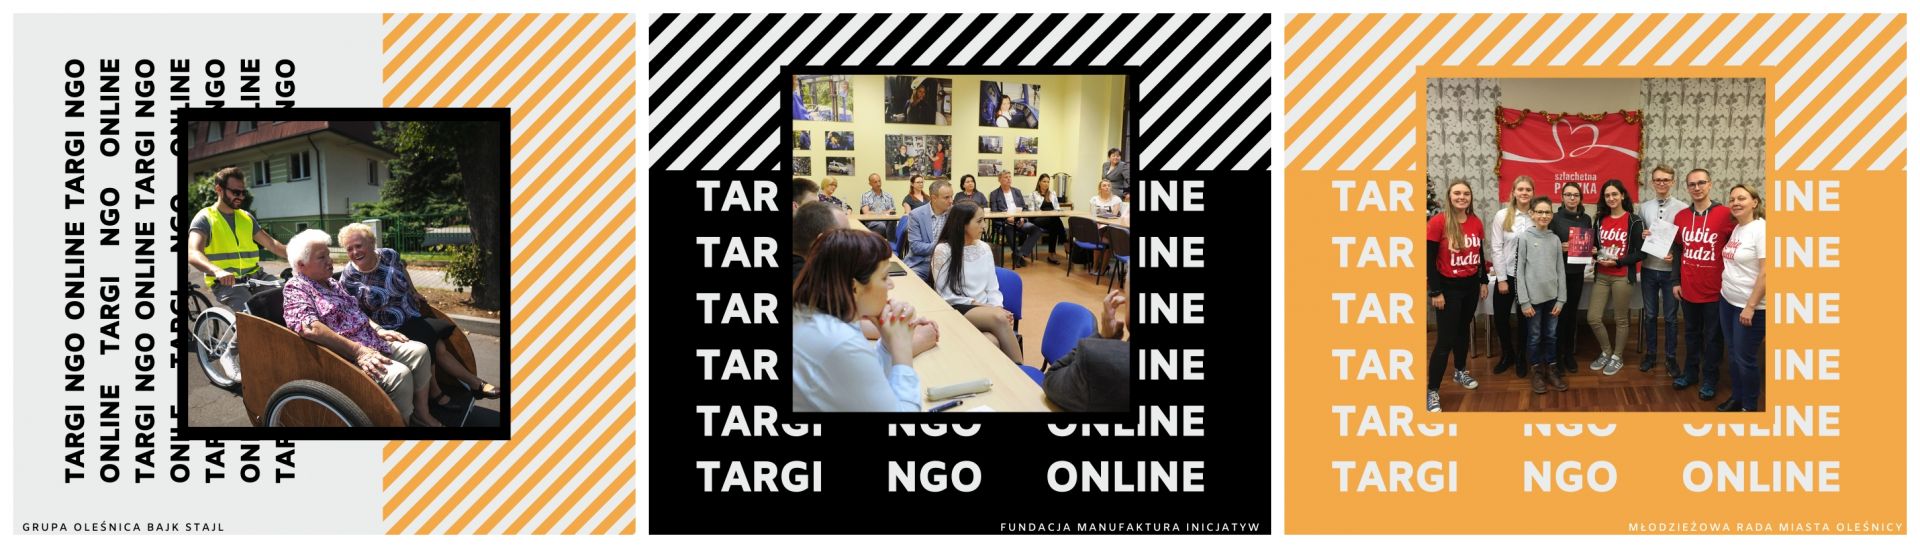 Grafika promująca TARGI NGO ONLINE